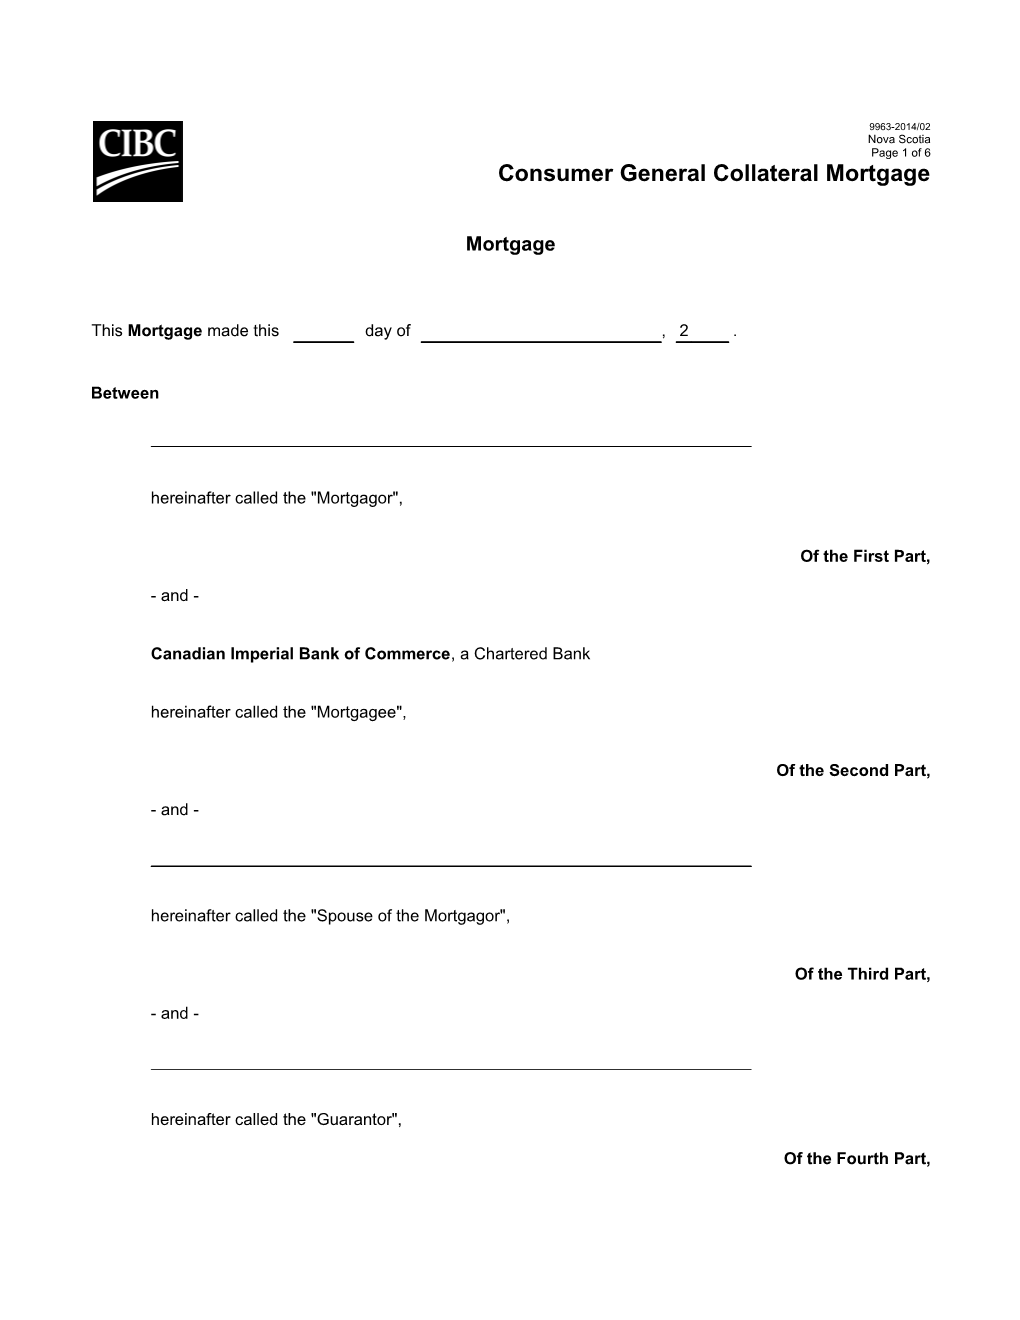 Consumer General Collateral Mortgage - Charge/Mortgage (9963 Nova Scotia-2014/12)